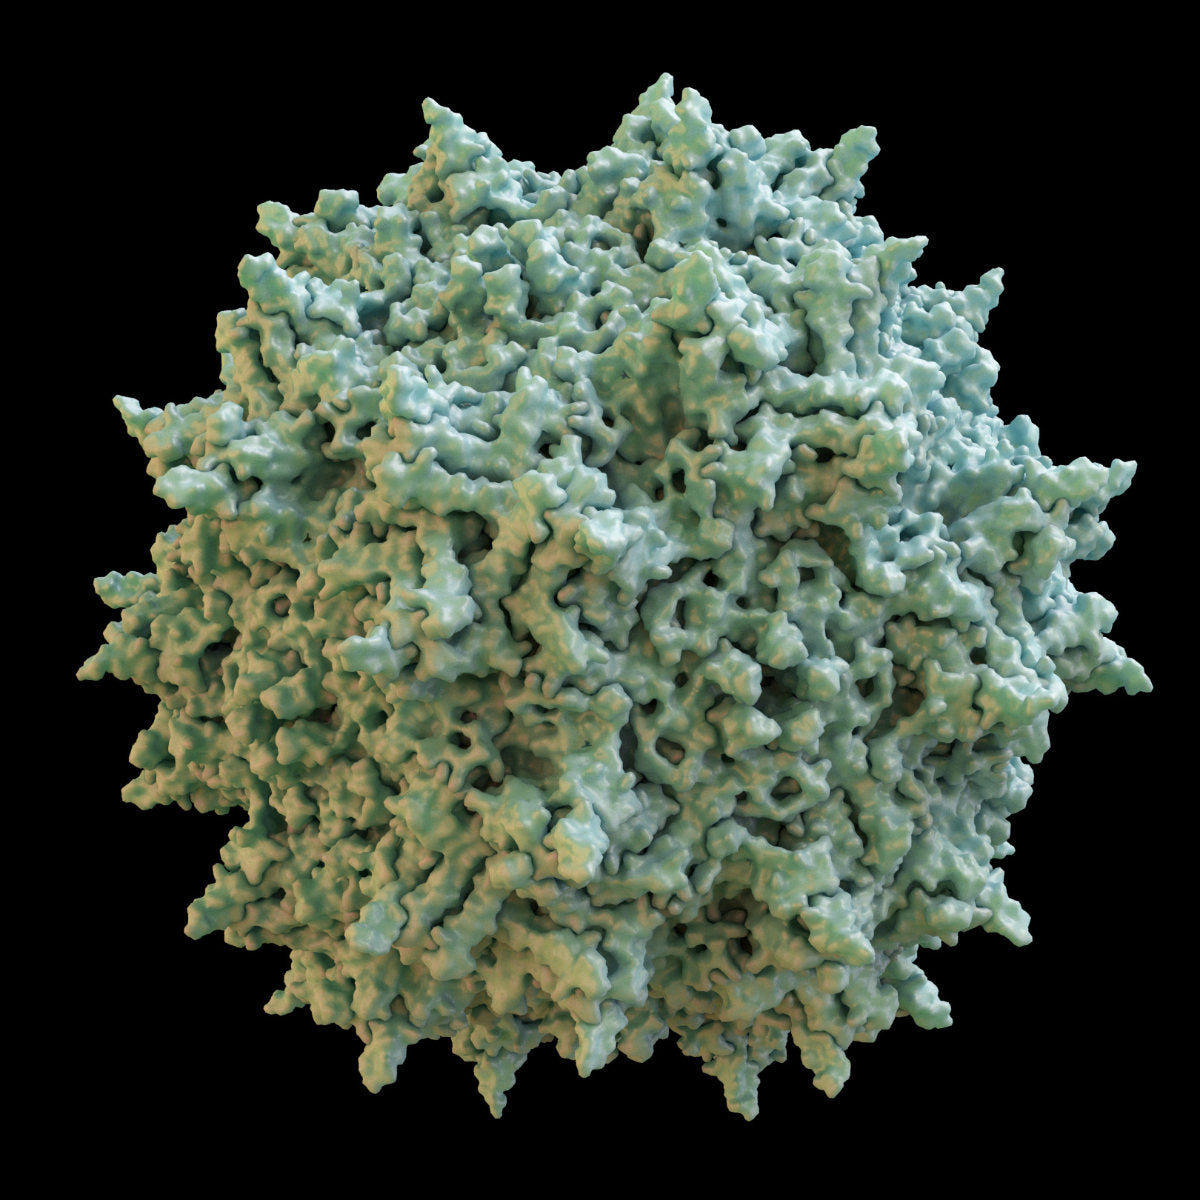 Adeno-Associated Virus (AAV)